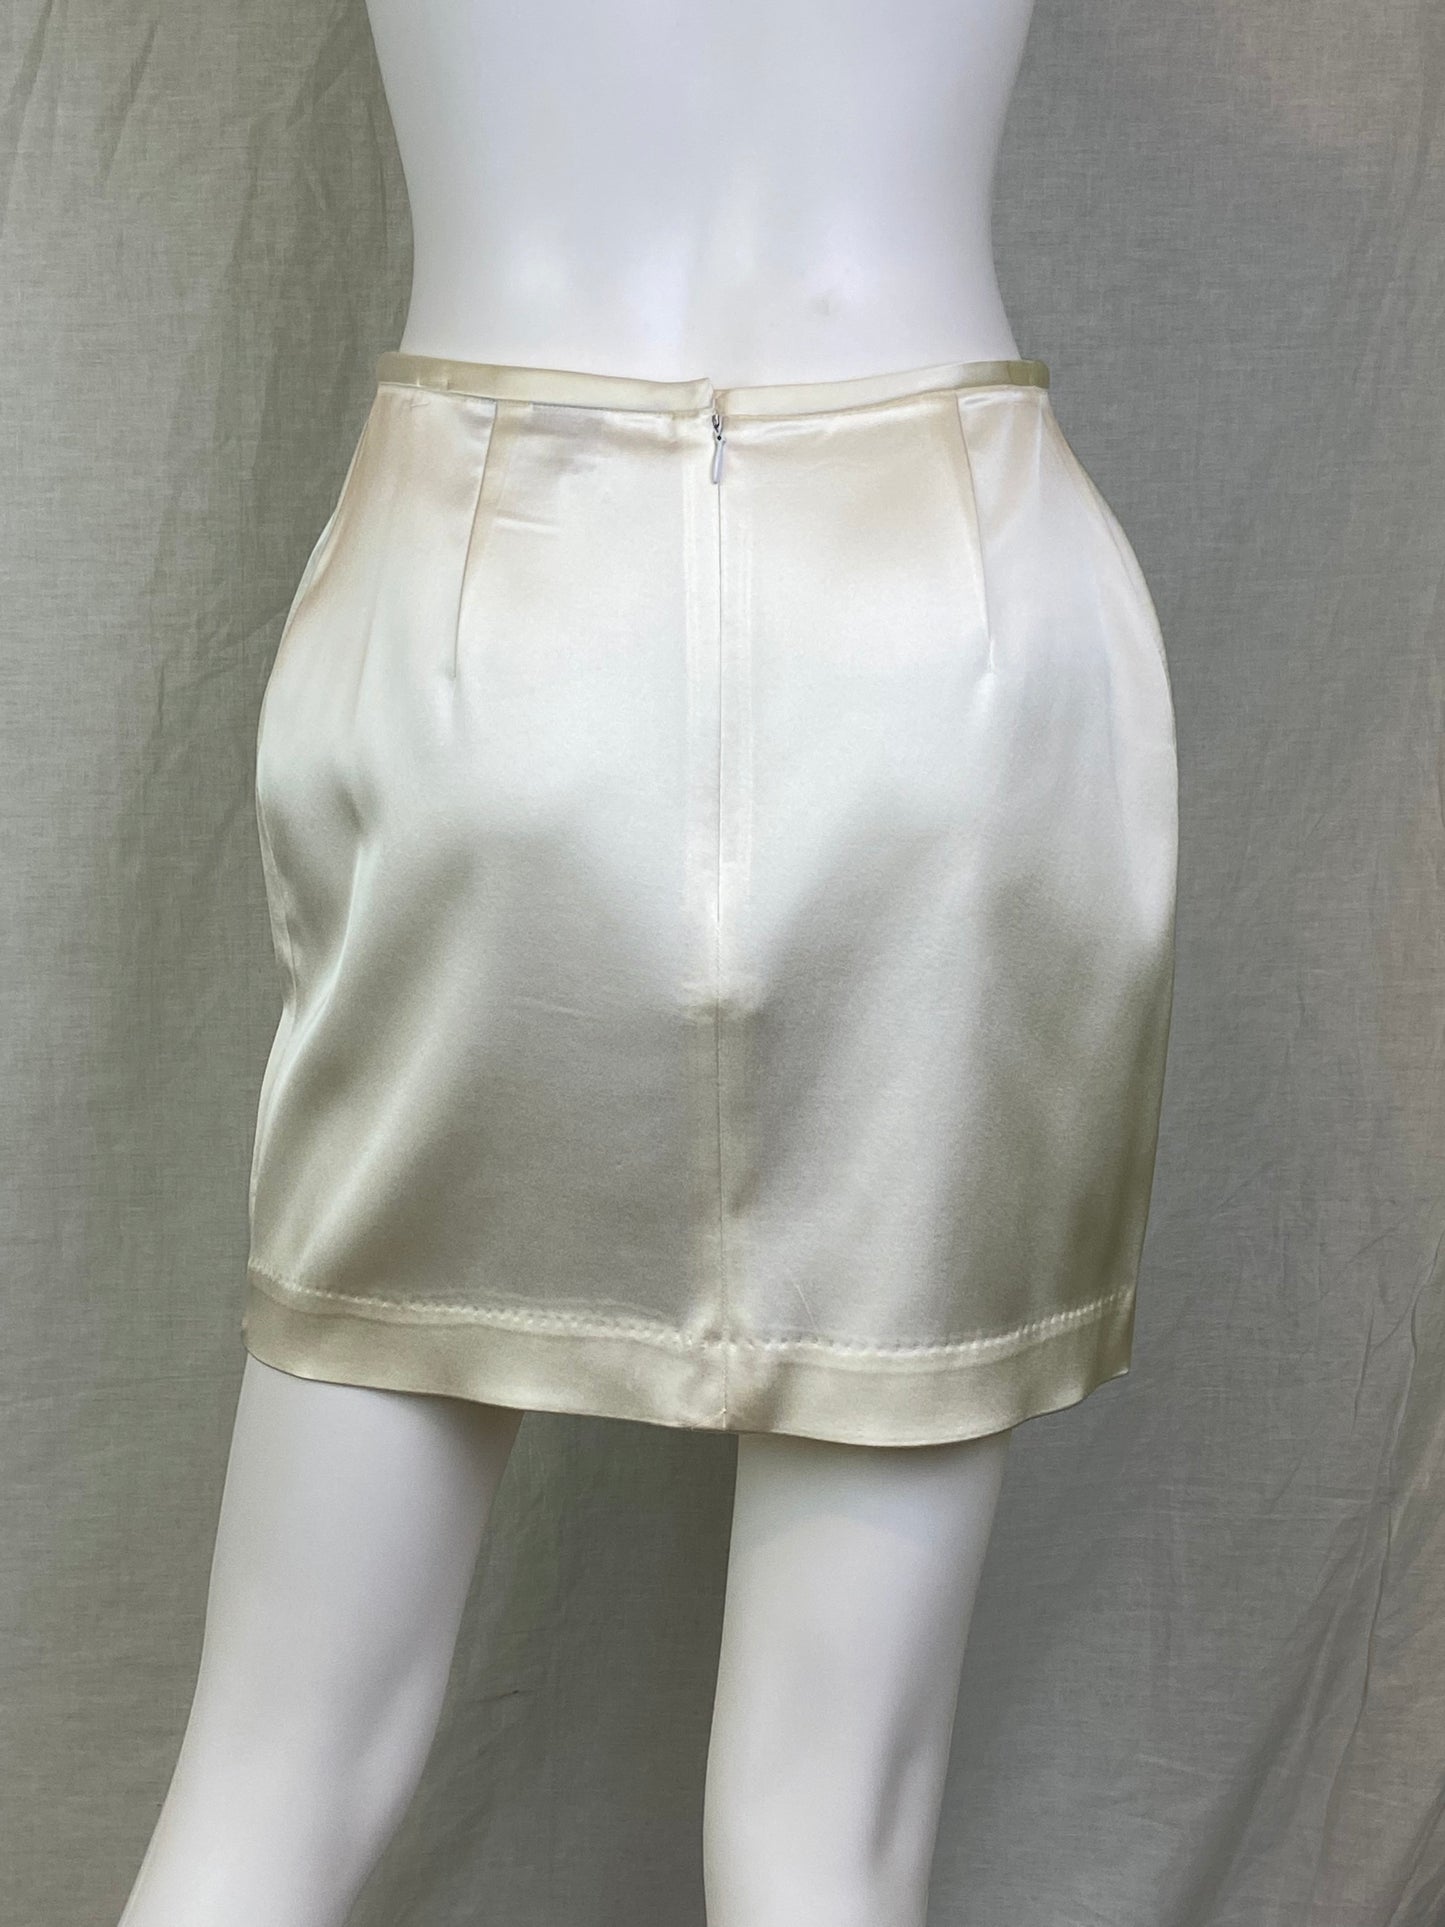 Adrianna Papell White Ivory Satin Cocktail Mini Skirt